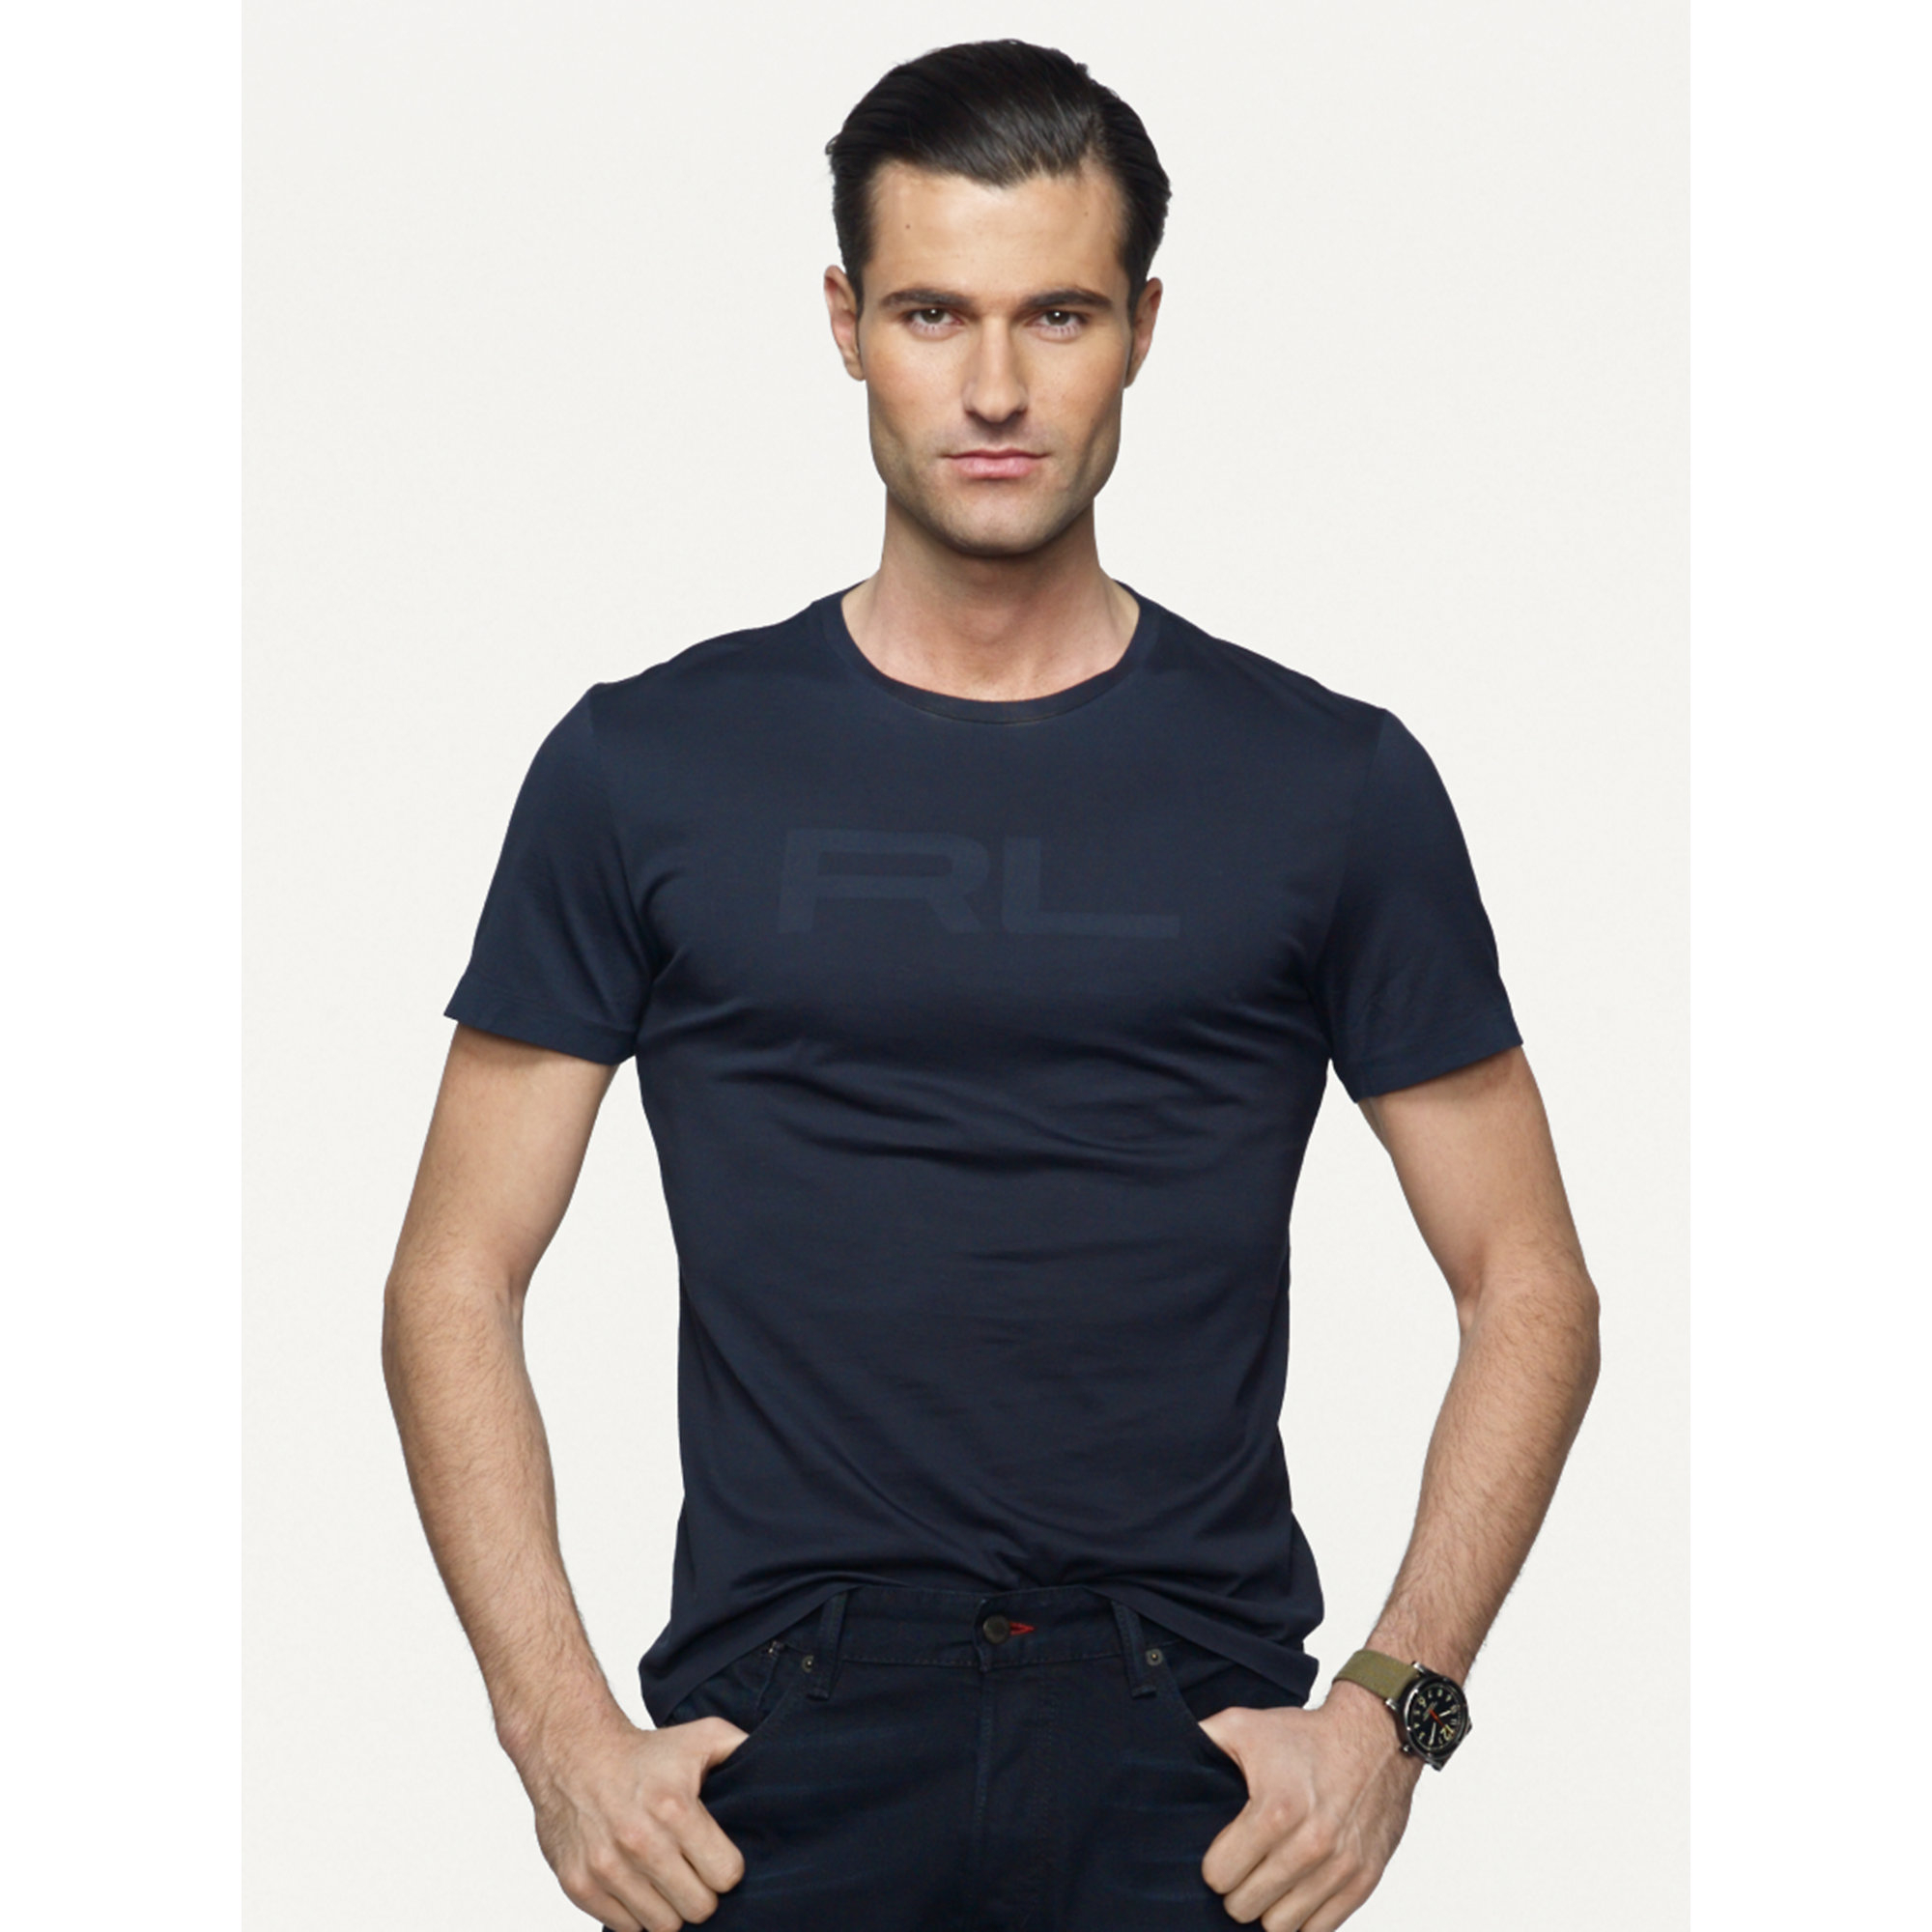 Lyst - Ralph lauren black label Logo Pima Cotton T-Shirt in Blue for Men